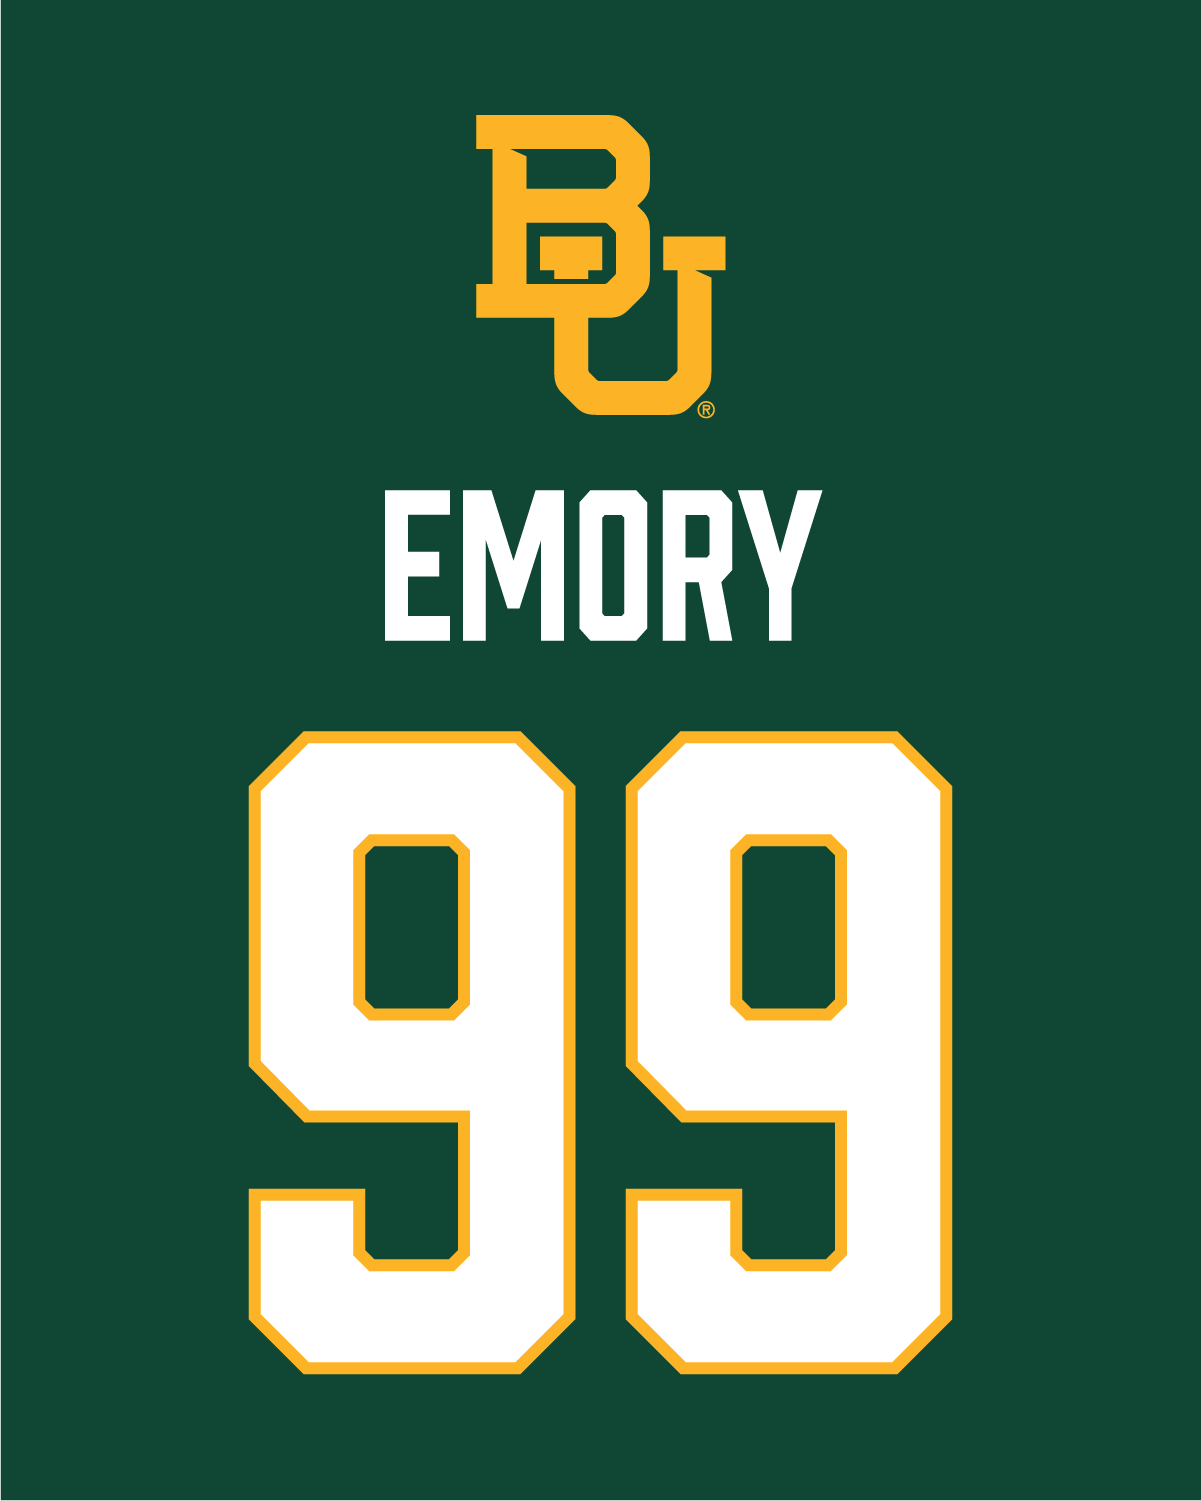 Tre Emory | #99